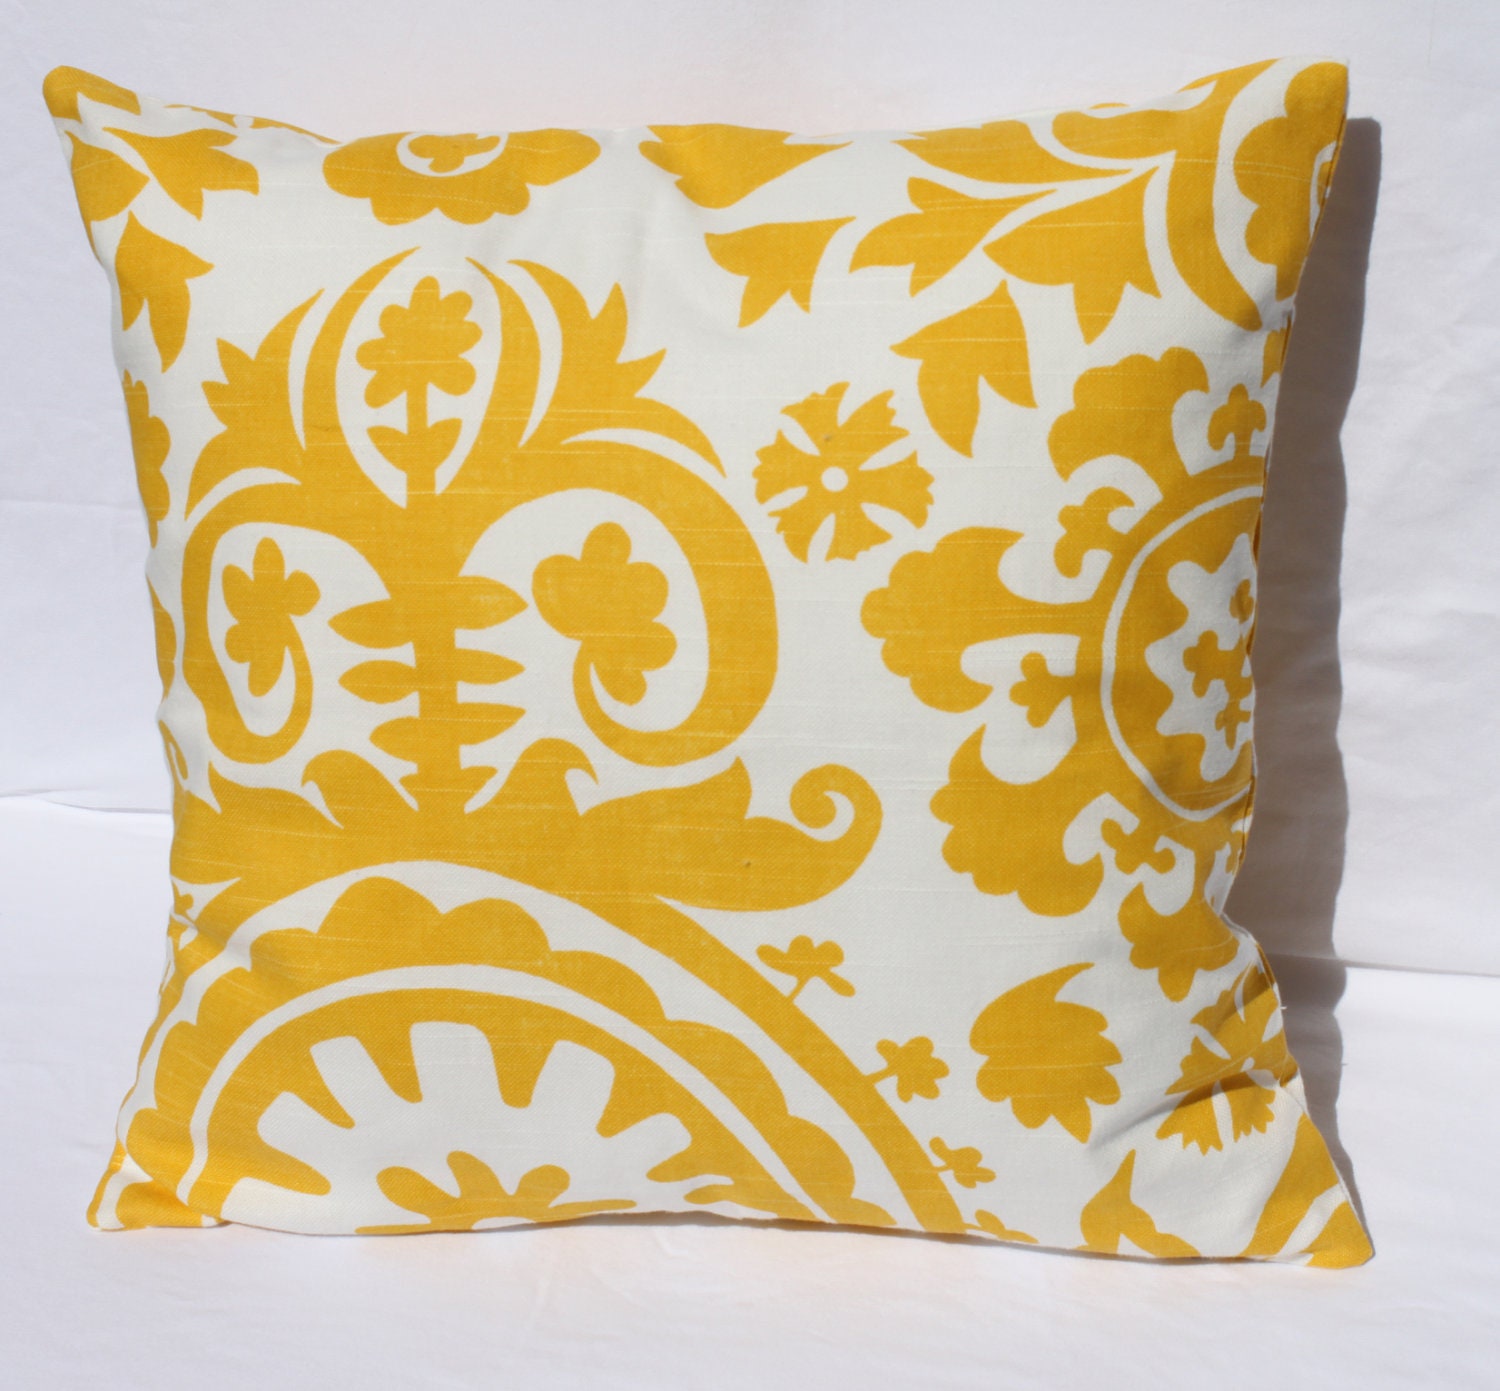 YELLOW PILLOW 16 x 16 Yellow Decorative Pillow by ThatsMyPillow